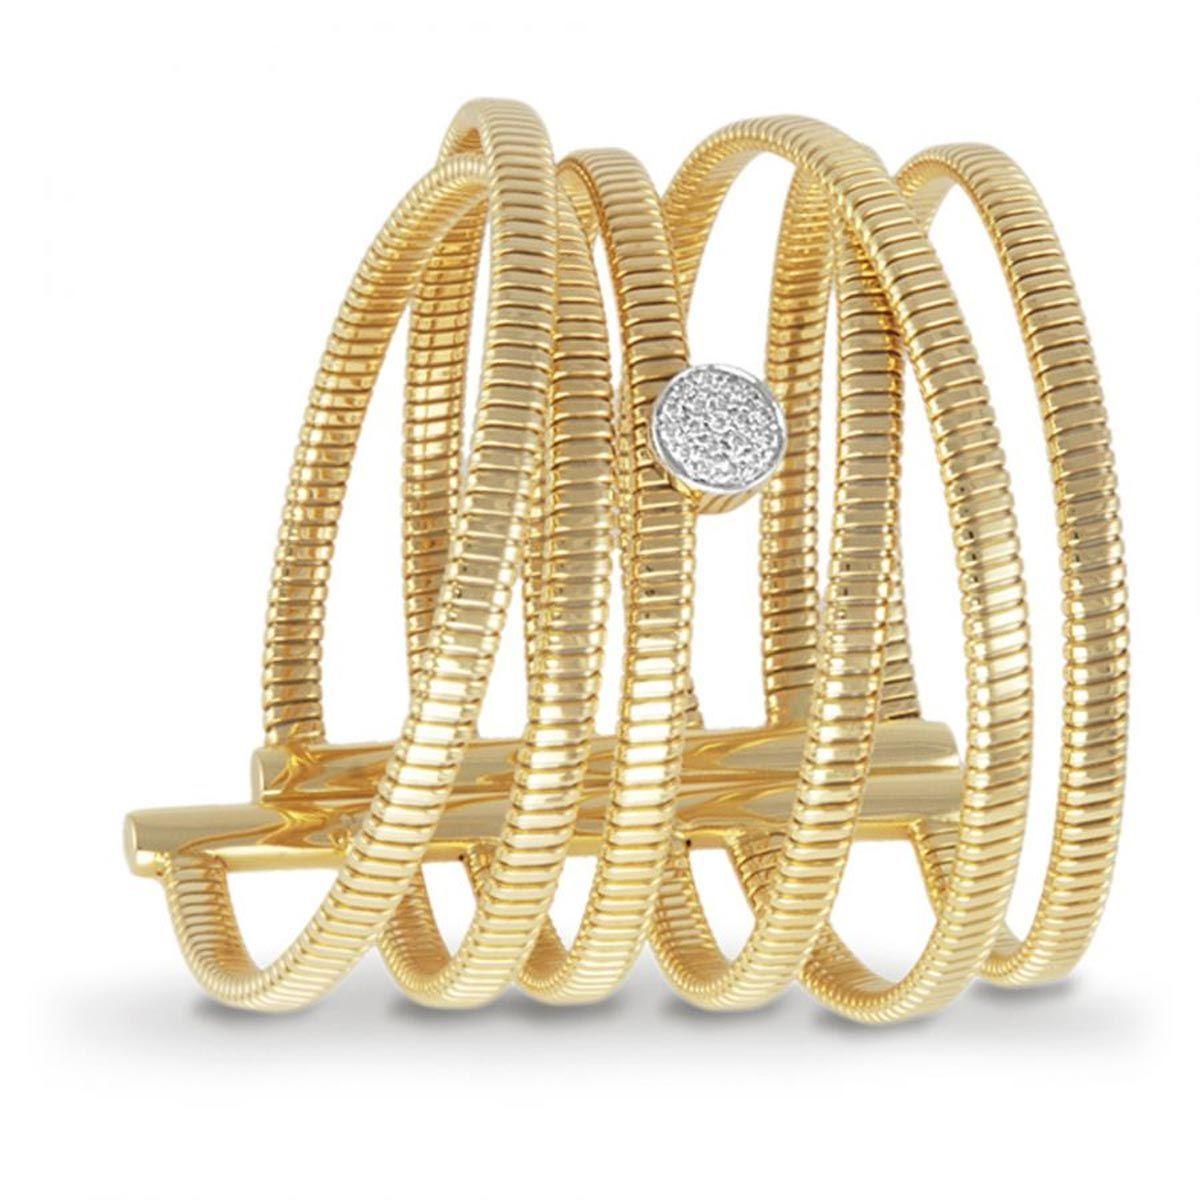 Brazalete en espiral de oro y diamantes, de Gordillo Joyeros